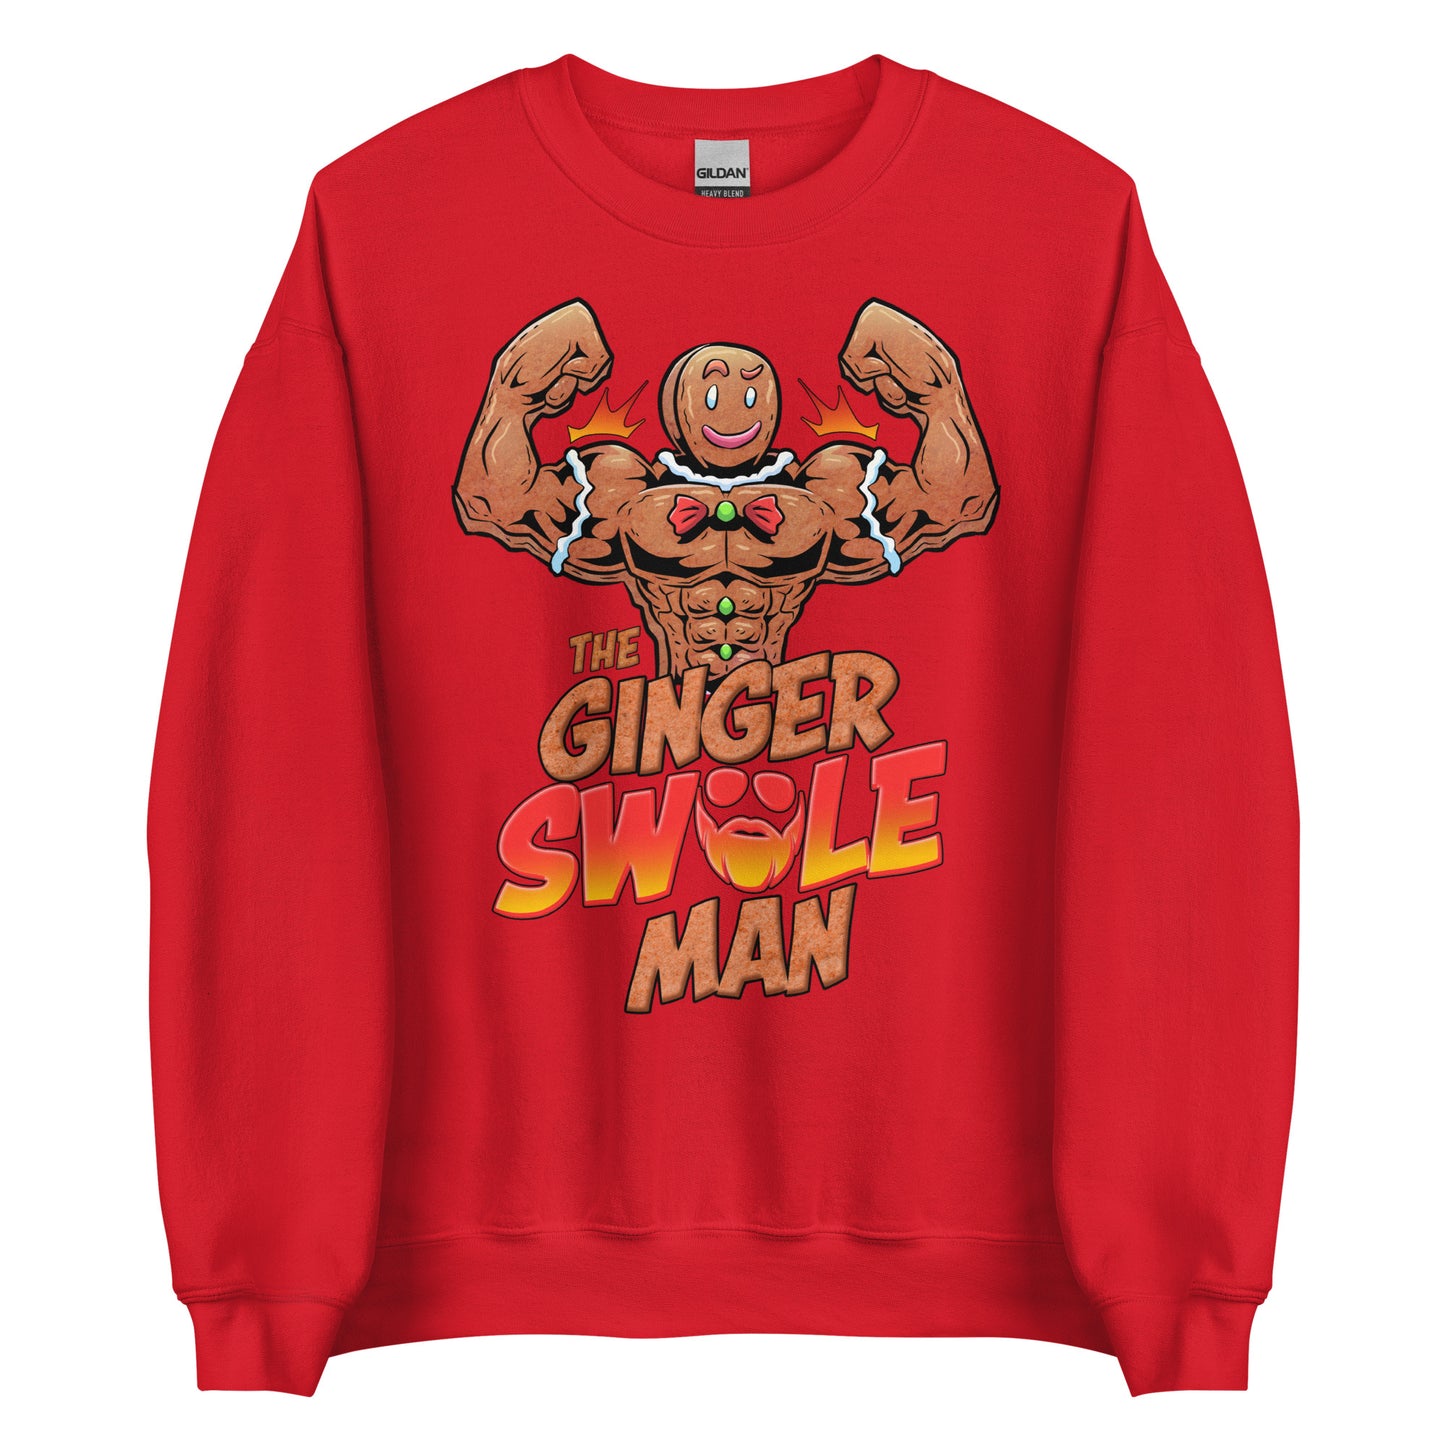 The Ginger Swole Man Sweatshirt